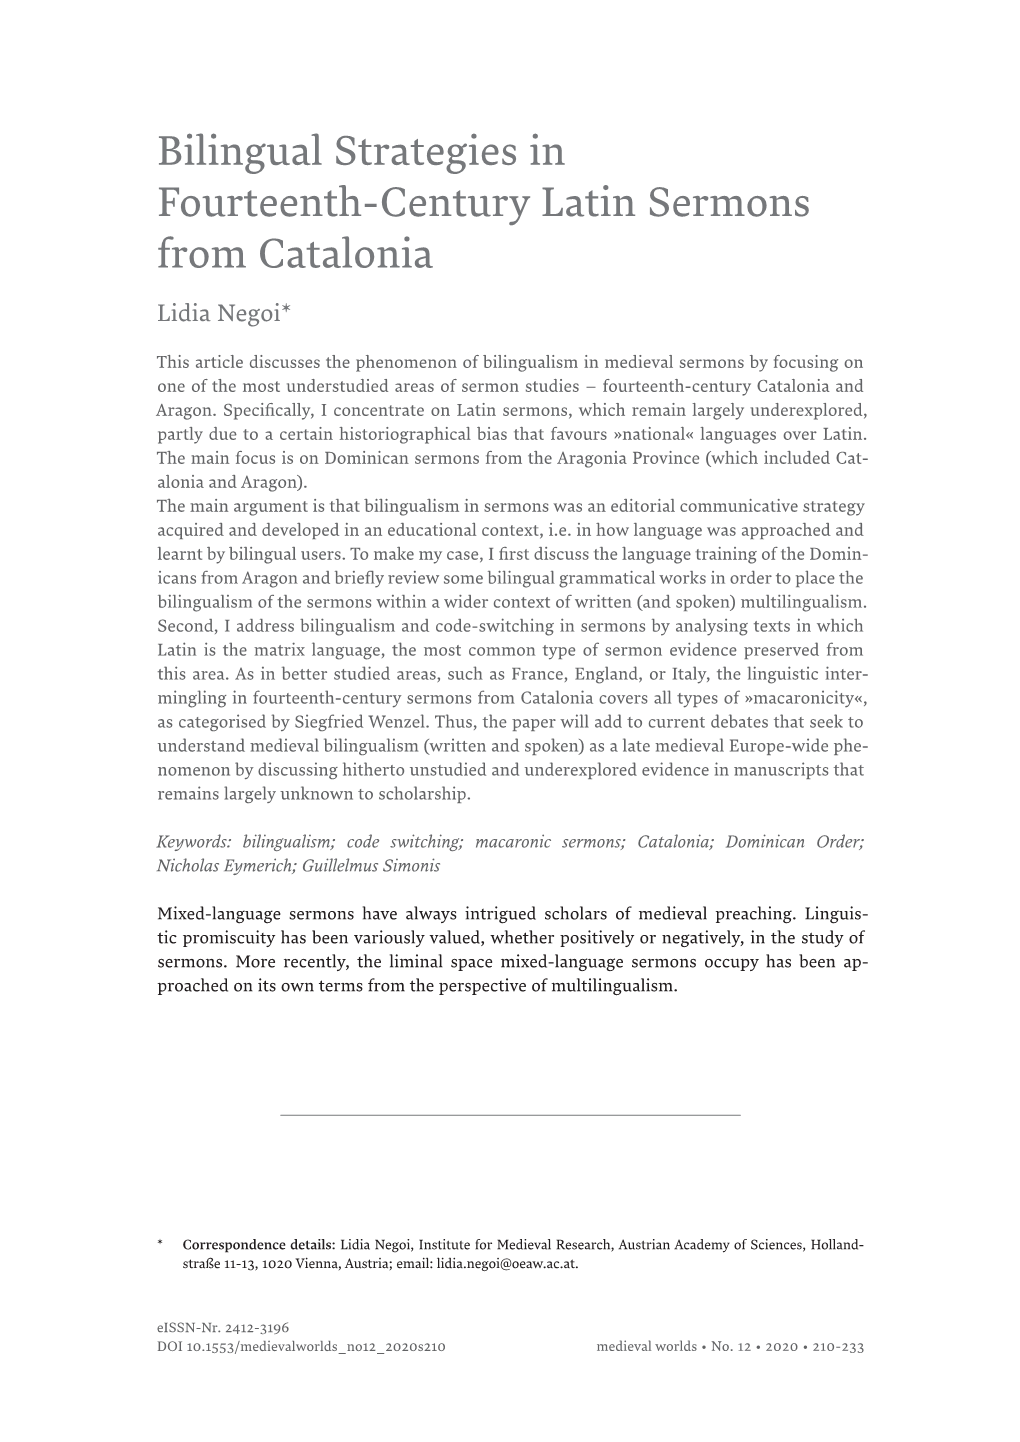 Bilingual Strategies in Fourteenth-Century Latin Sermons from Catalonia